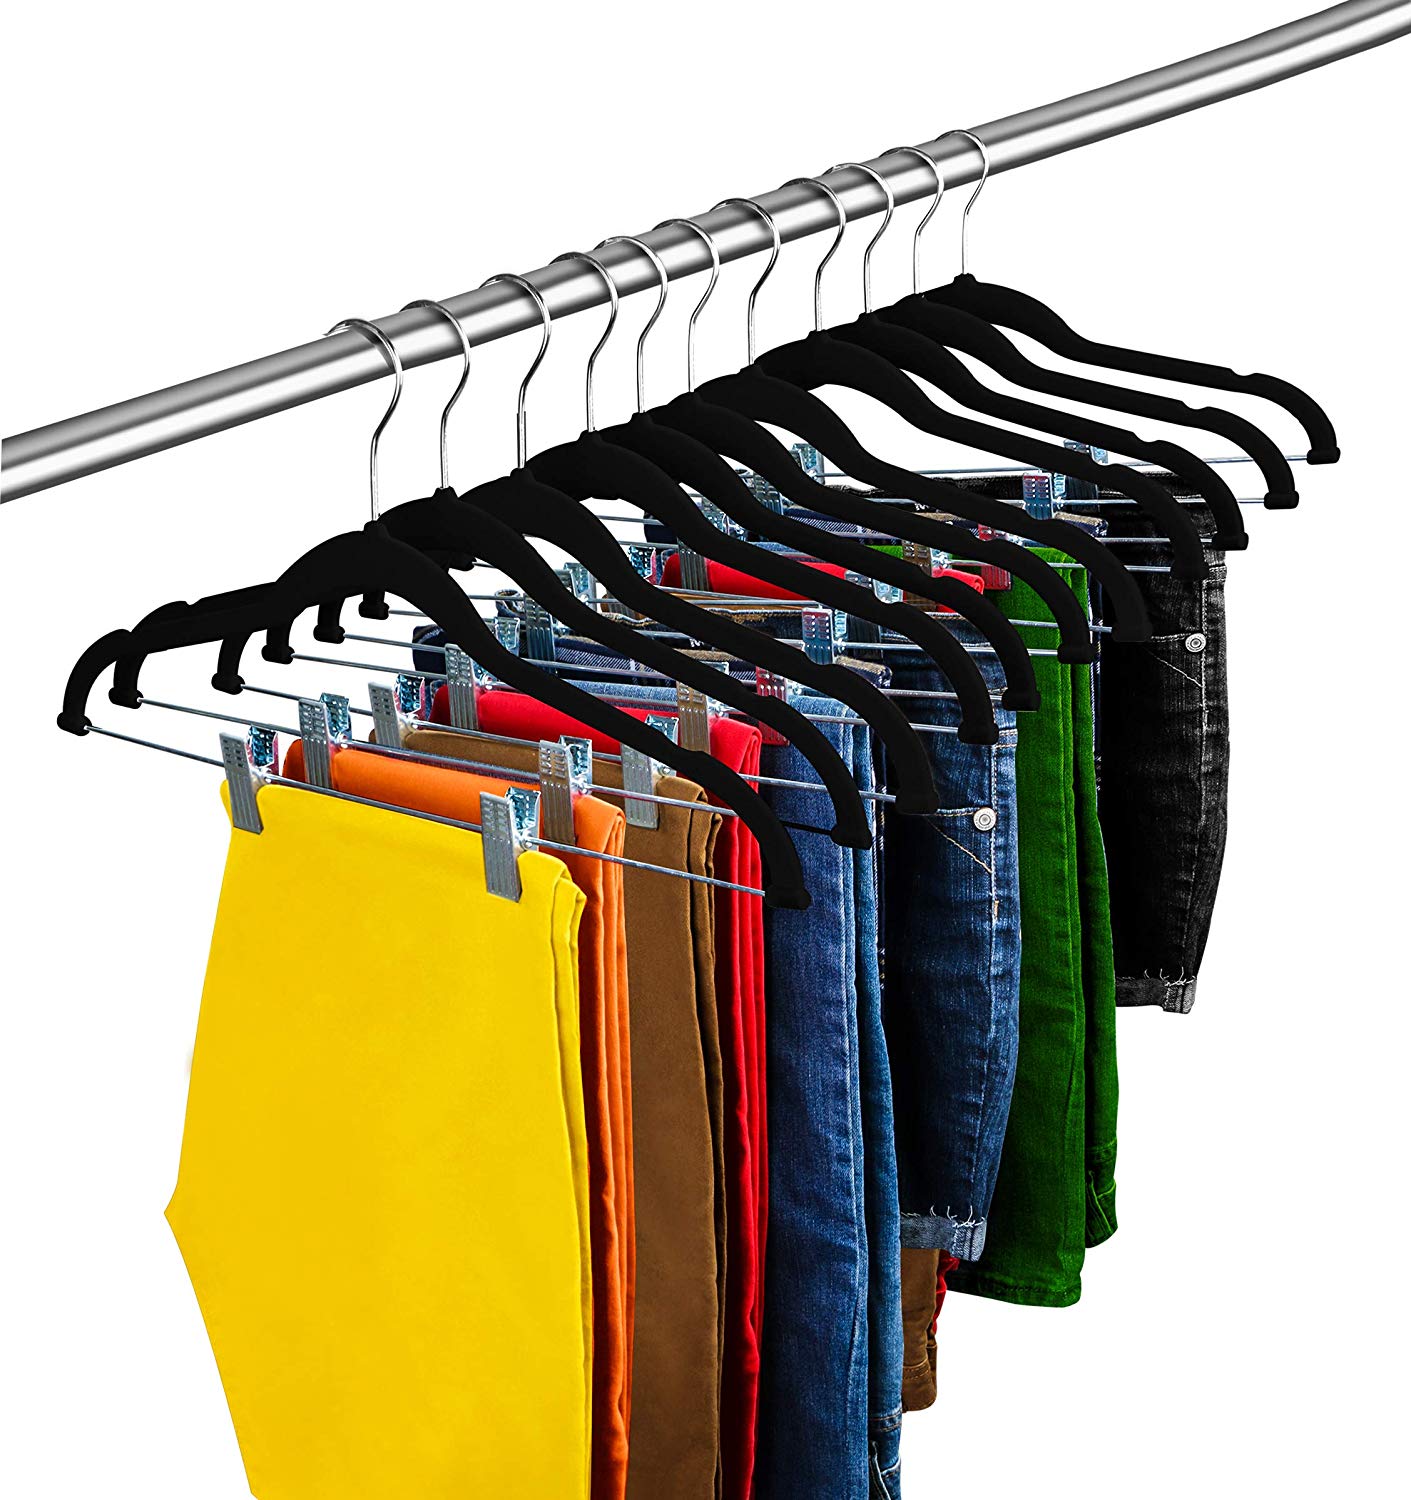 Utopia Home Clothes Hangers 30 Pack - Plastic Hangers Space Saving - Durable Coat Hanger with Shoulder Grooves (Black)